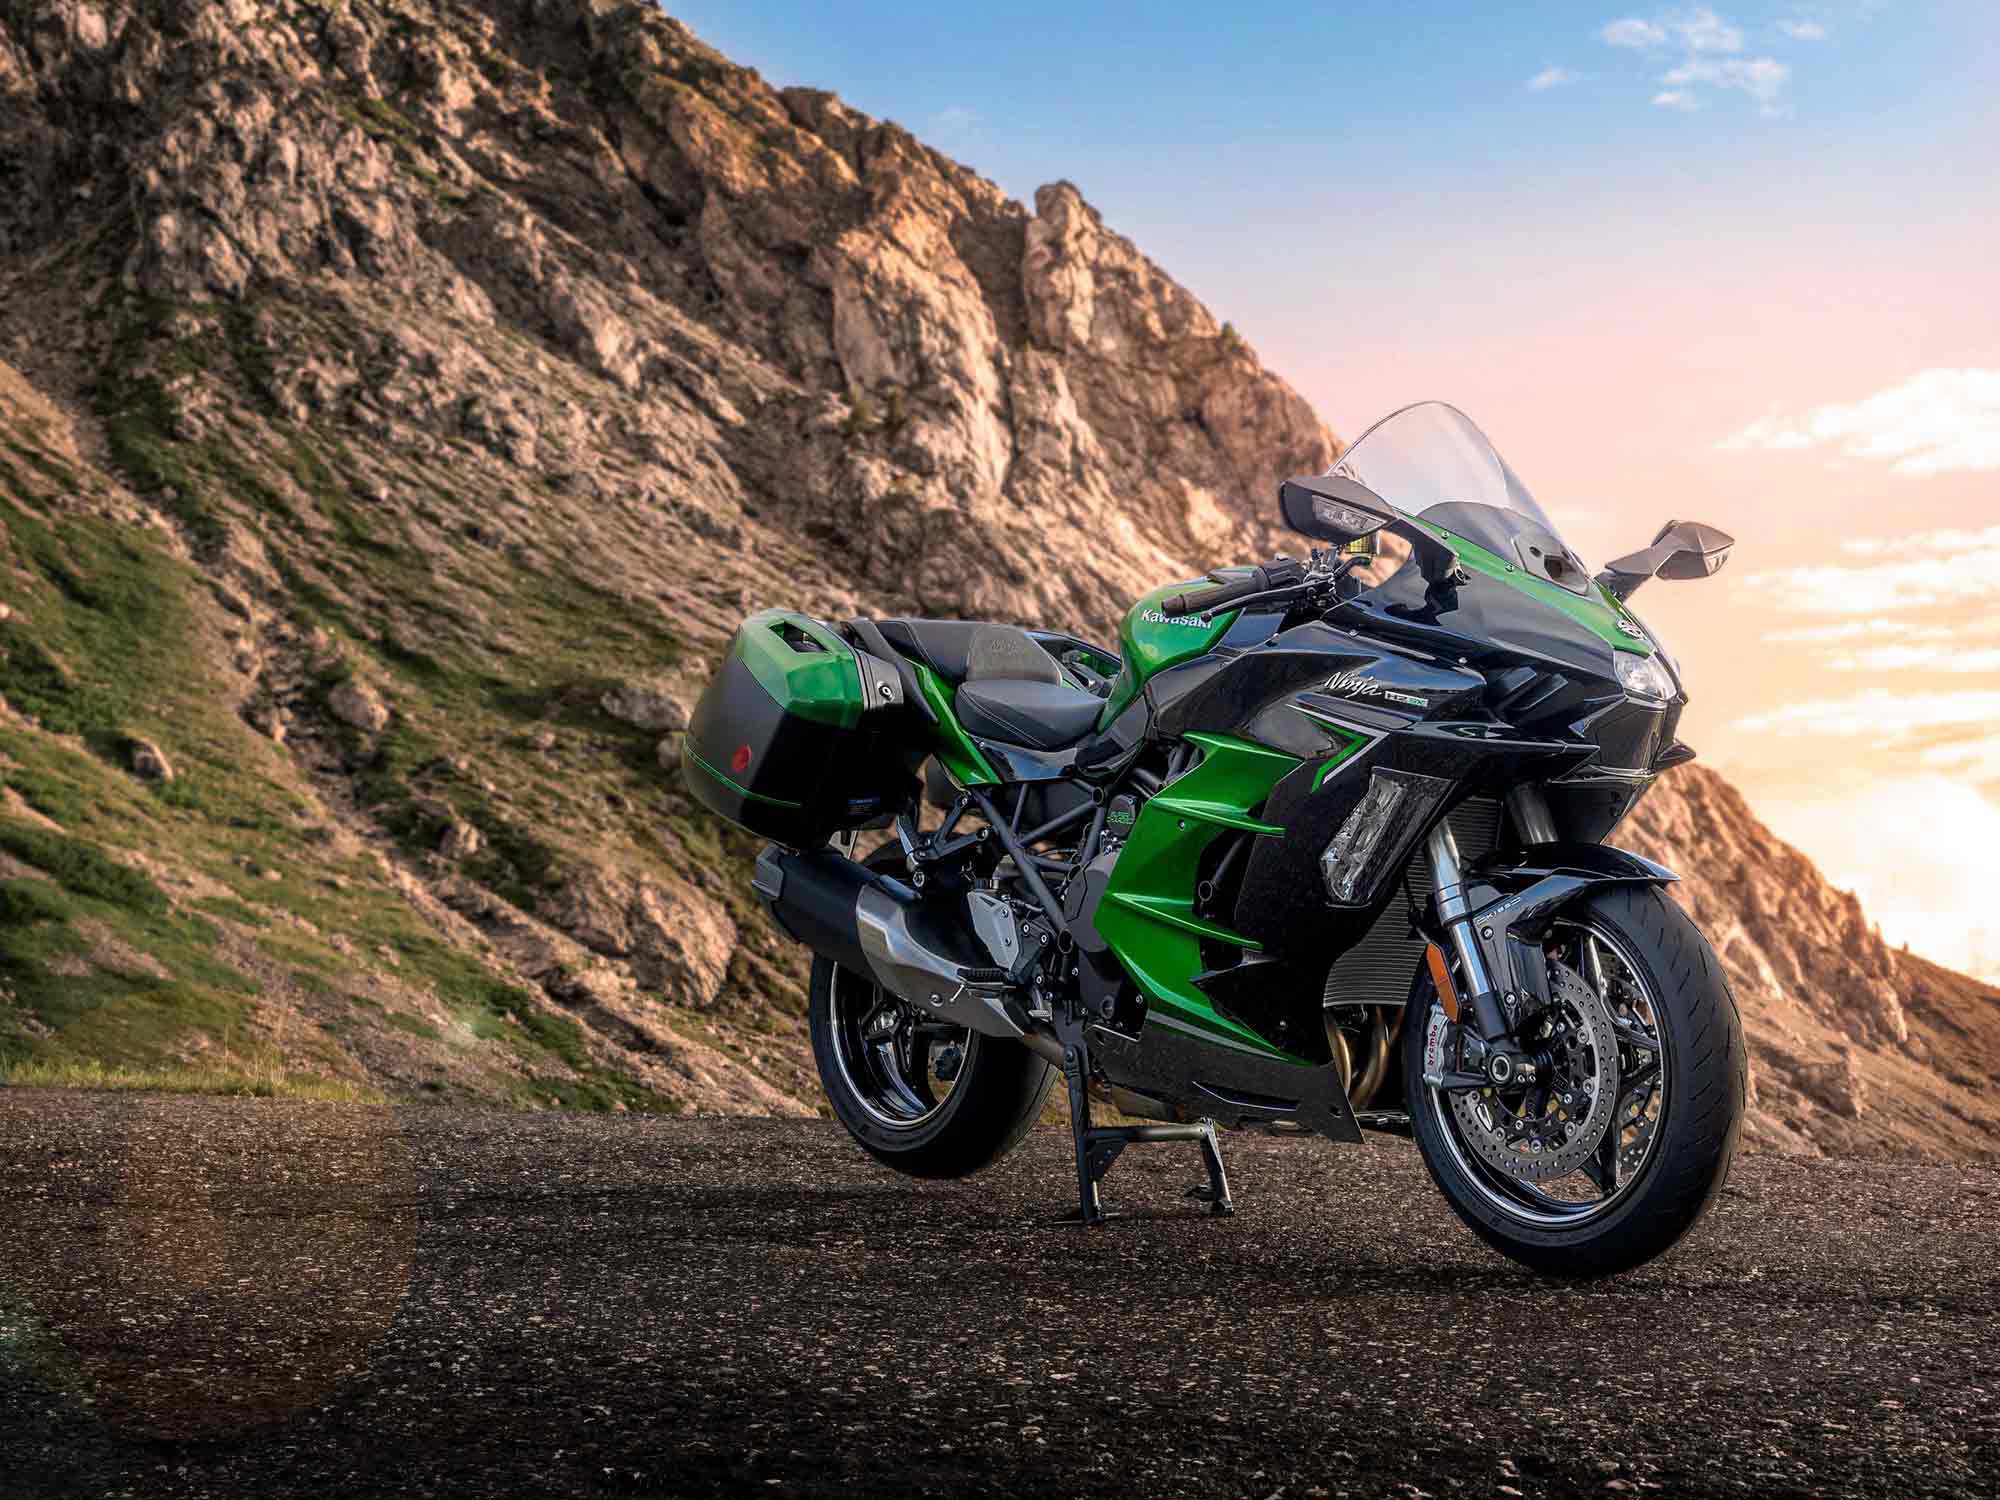 The 2023 Kawasaki Ninja H2 SX SE will come in an Emerald Blazed Green, Metallic Diablo Black, and Metallic Graphite Gray colorway.